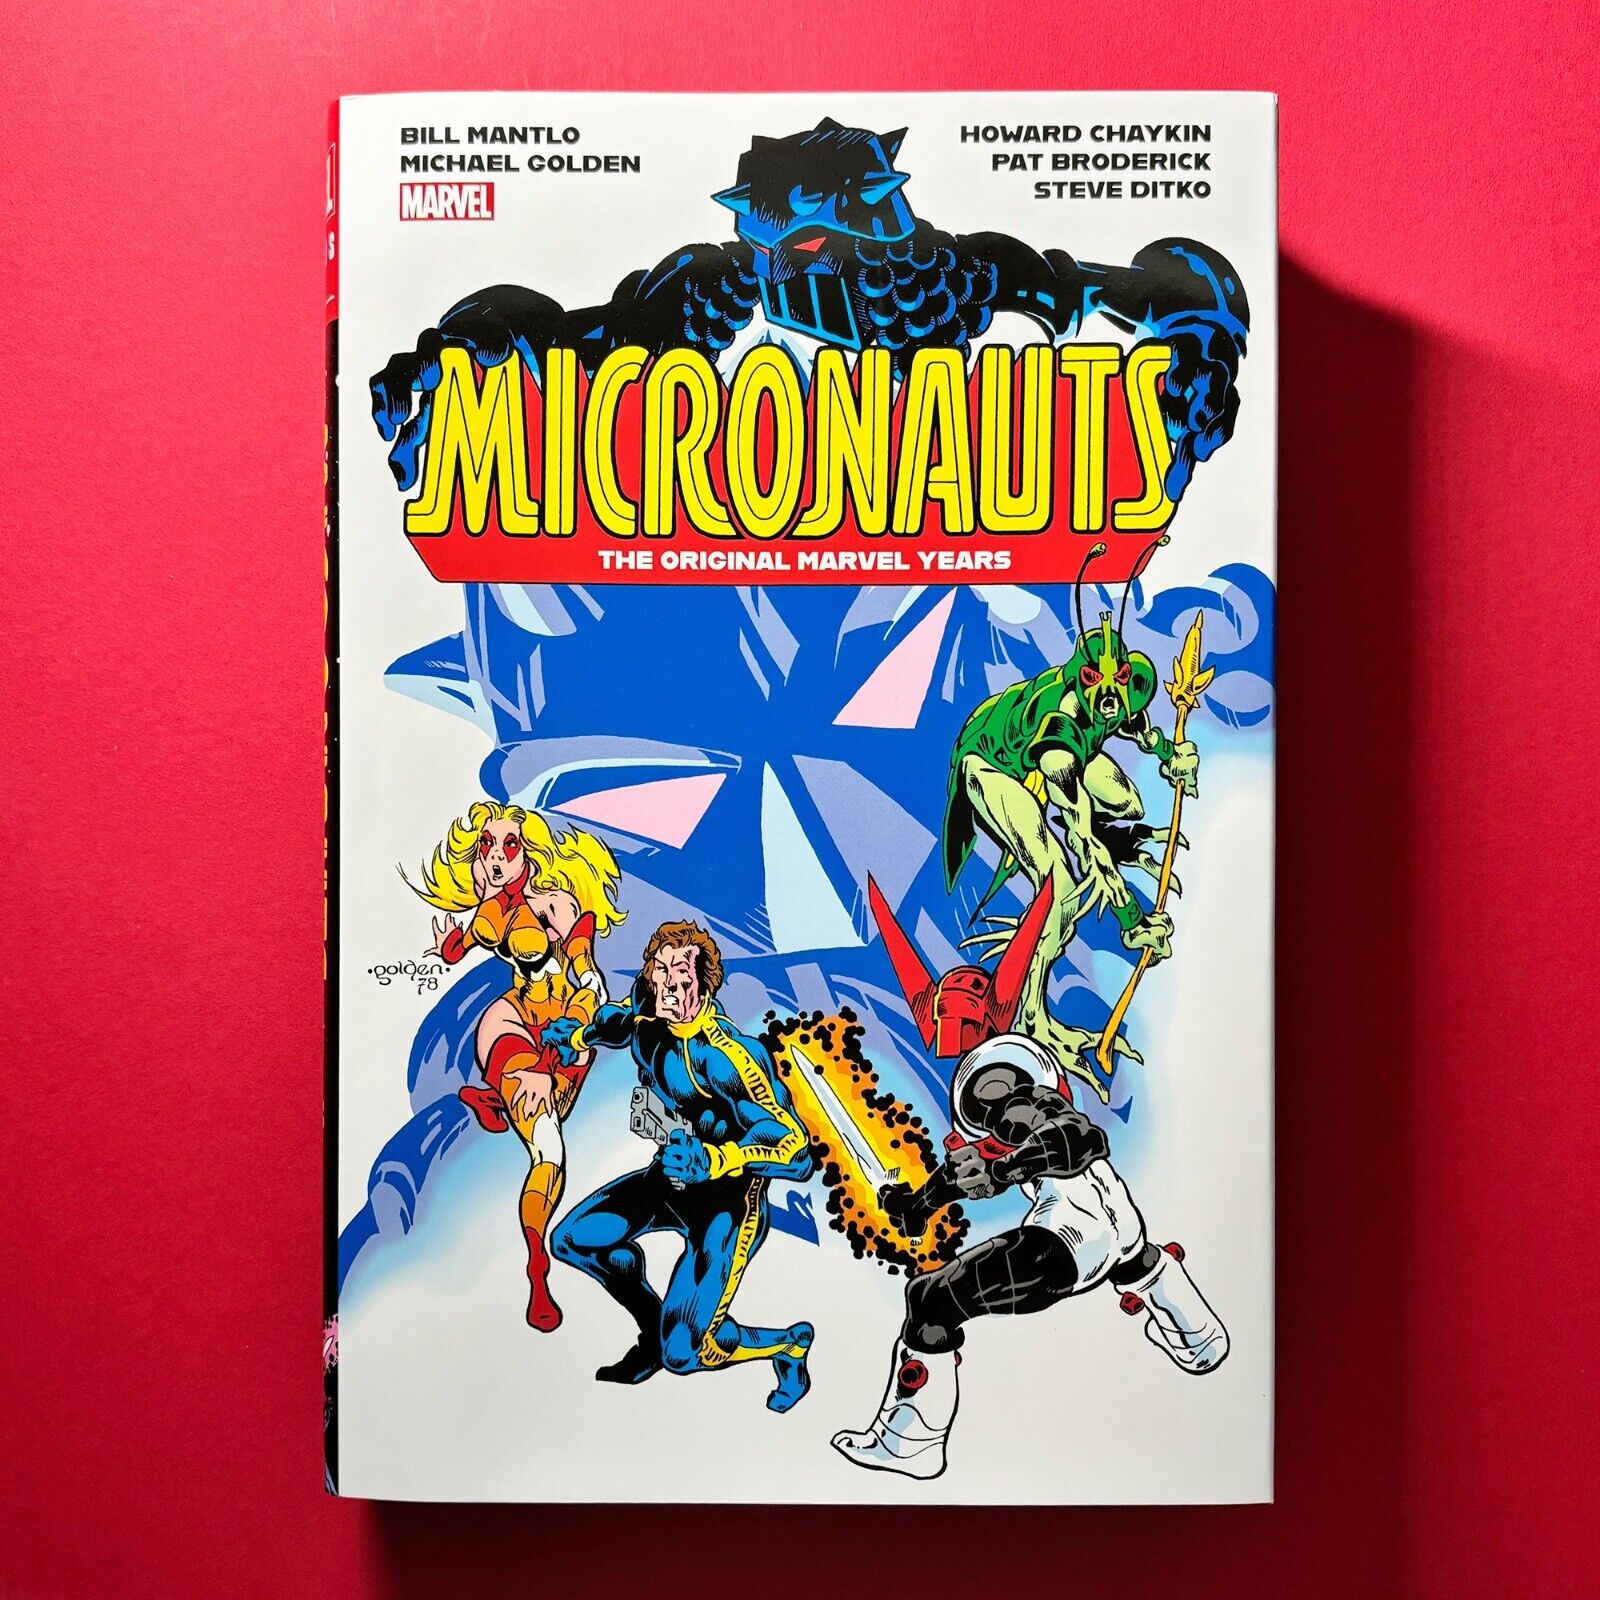 Micronauts The Original Marvel Years Omnibus Vol 1 GOLDEN DM COVER New HC Comics